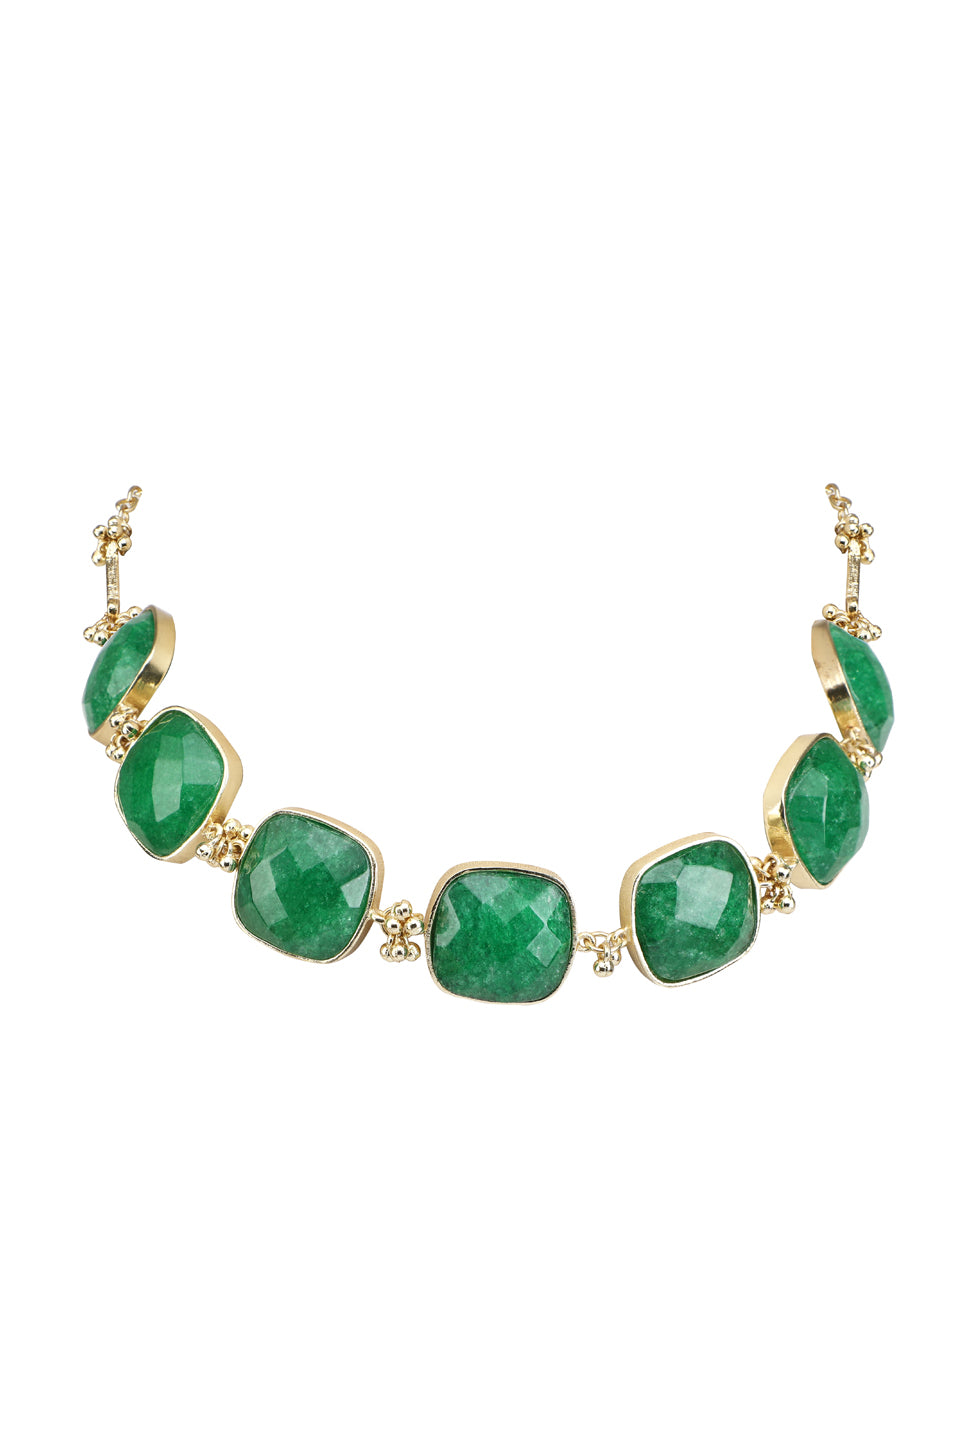 Square Green Stone Necklace